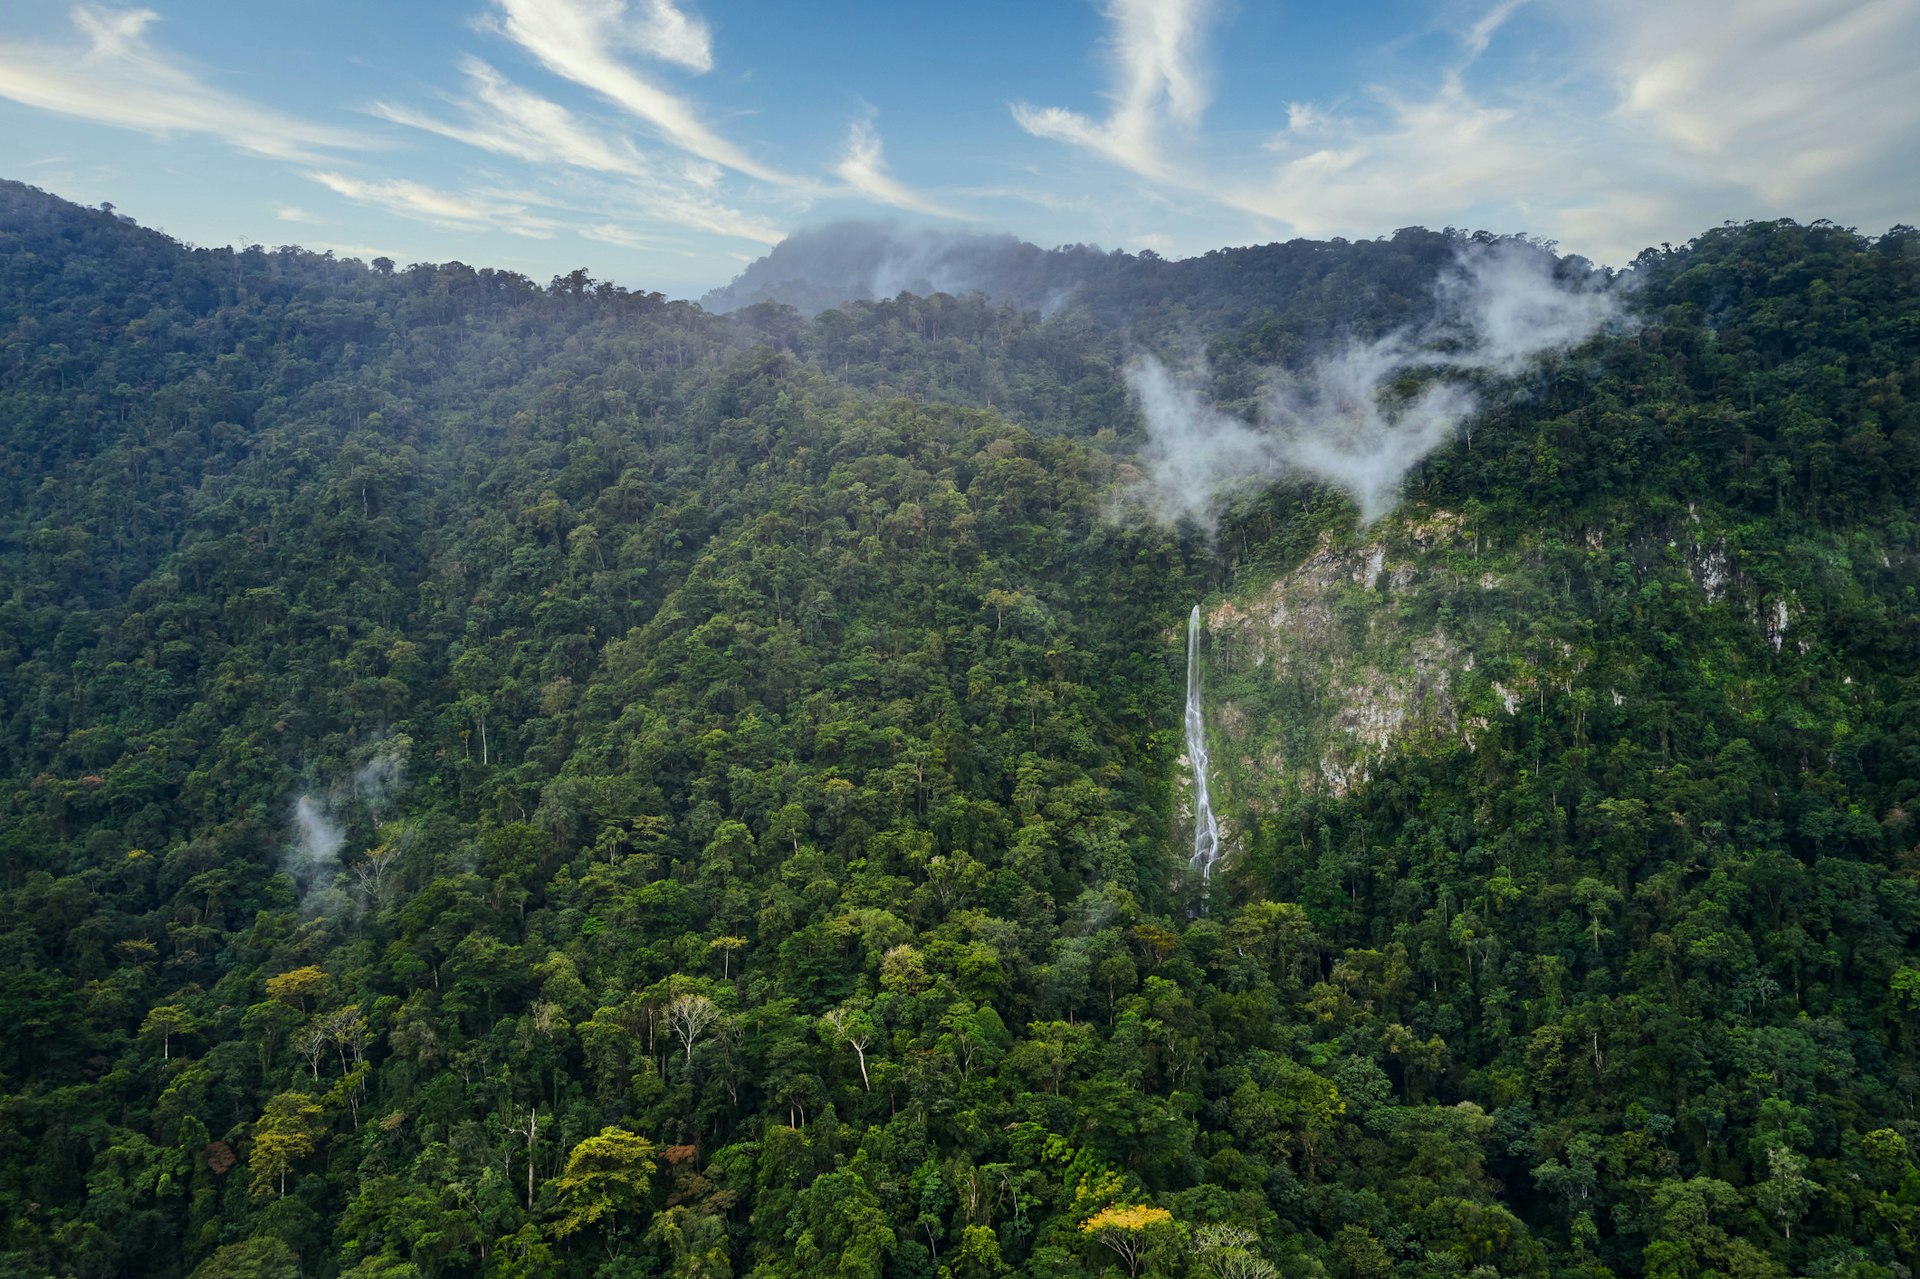 A waterfall in dense jungle